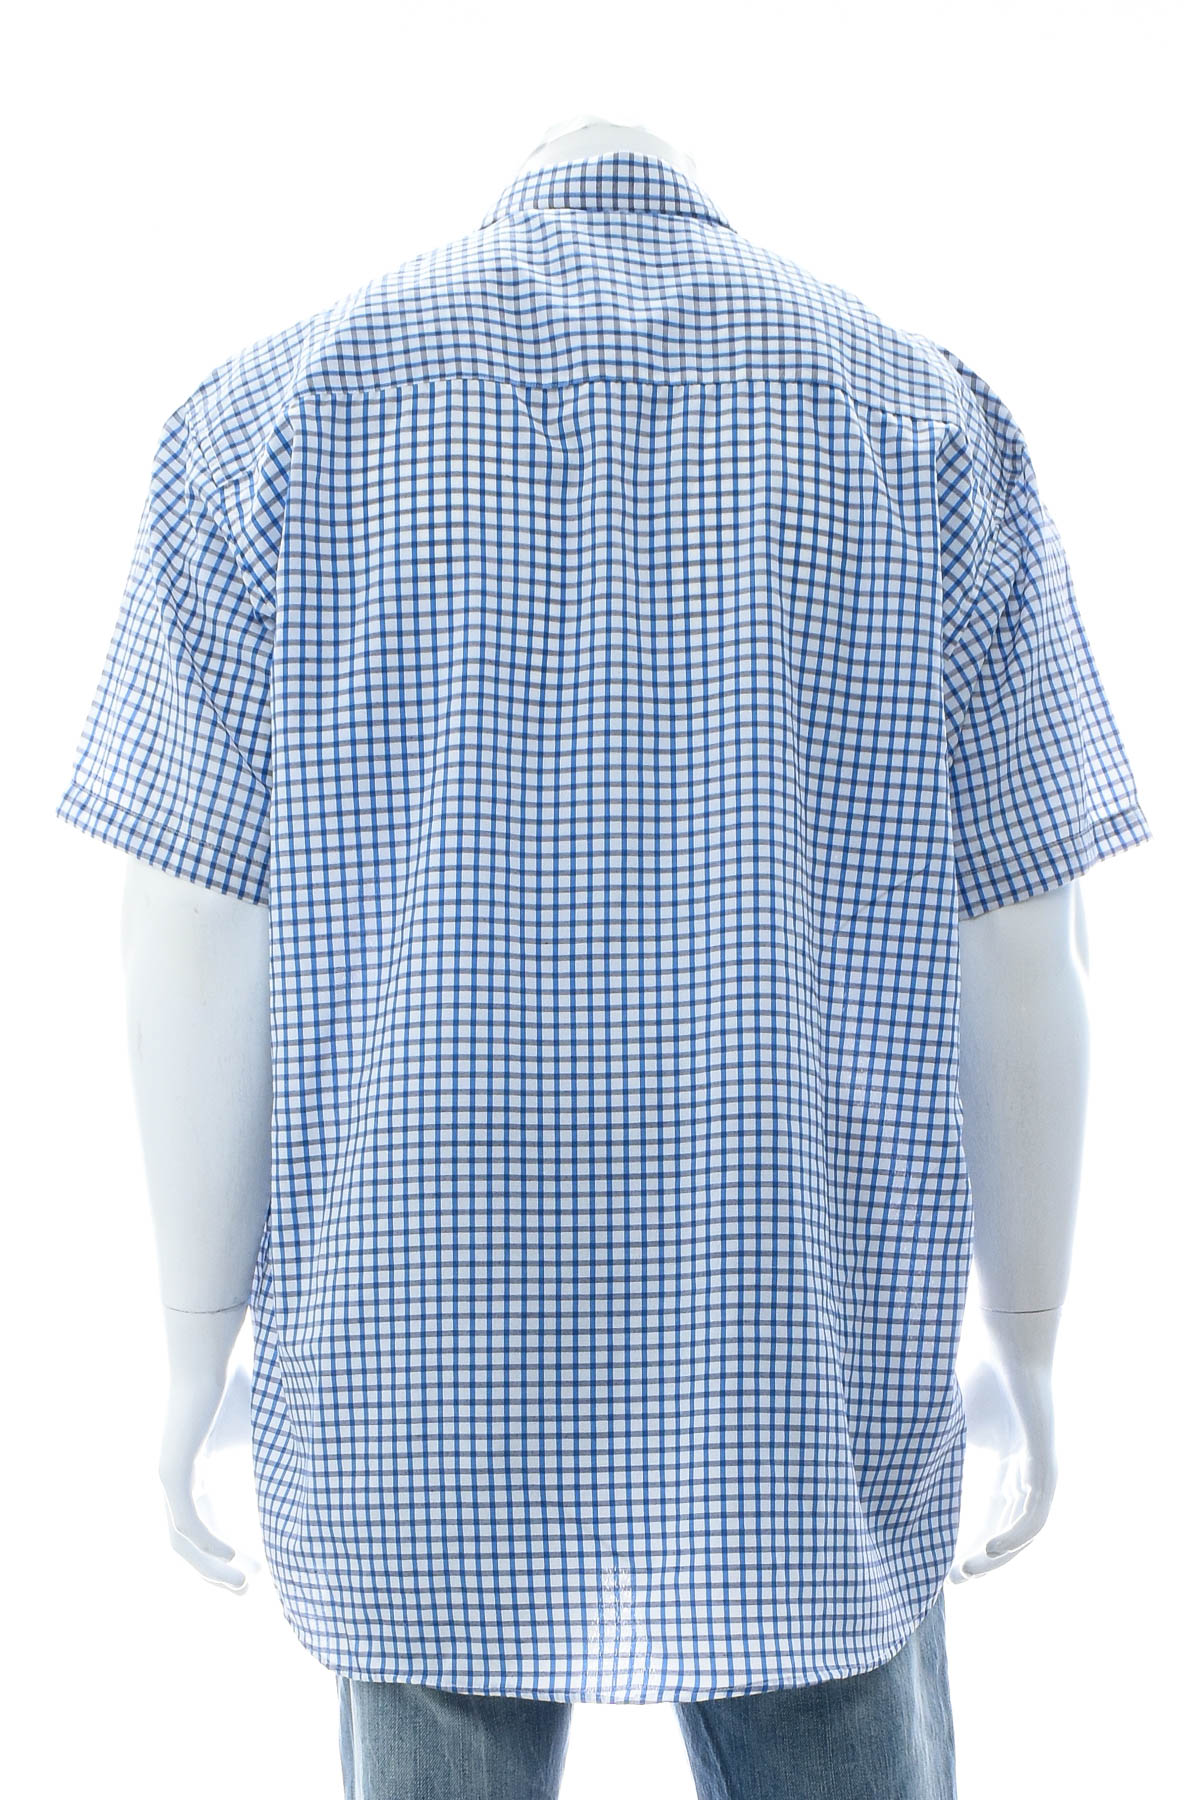 Men's shirt - Charles Rene - 1